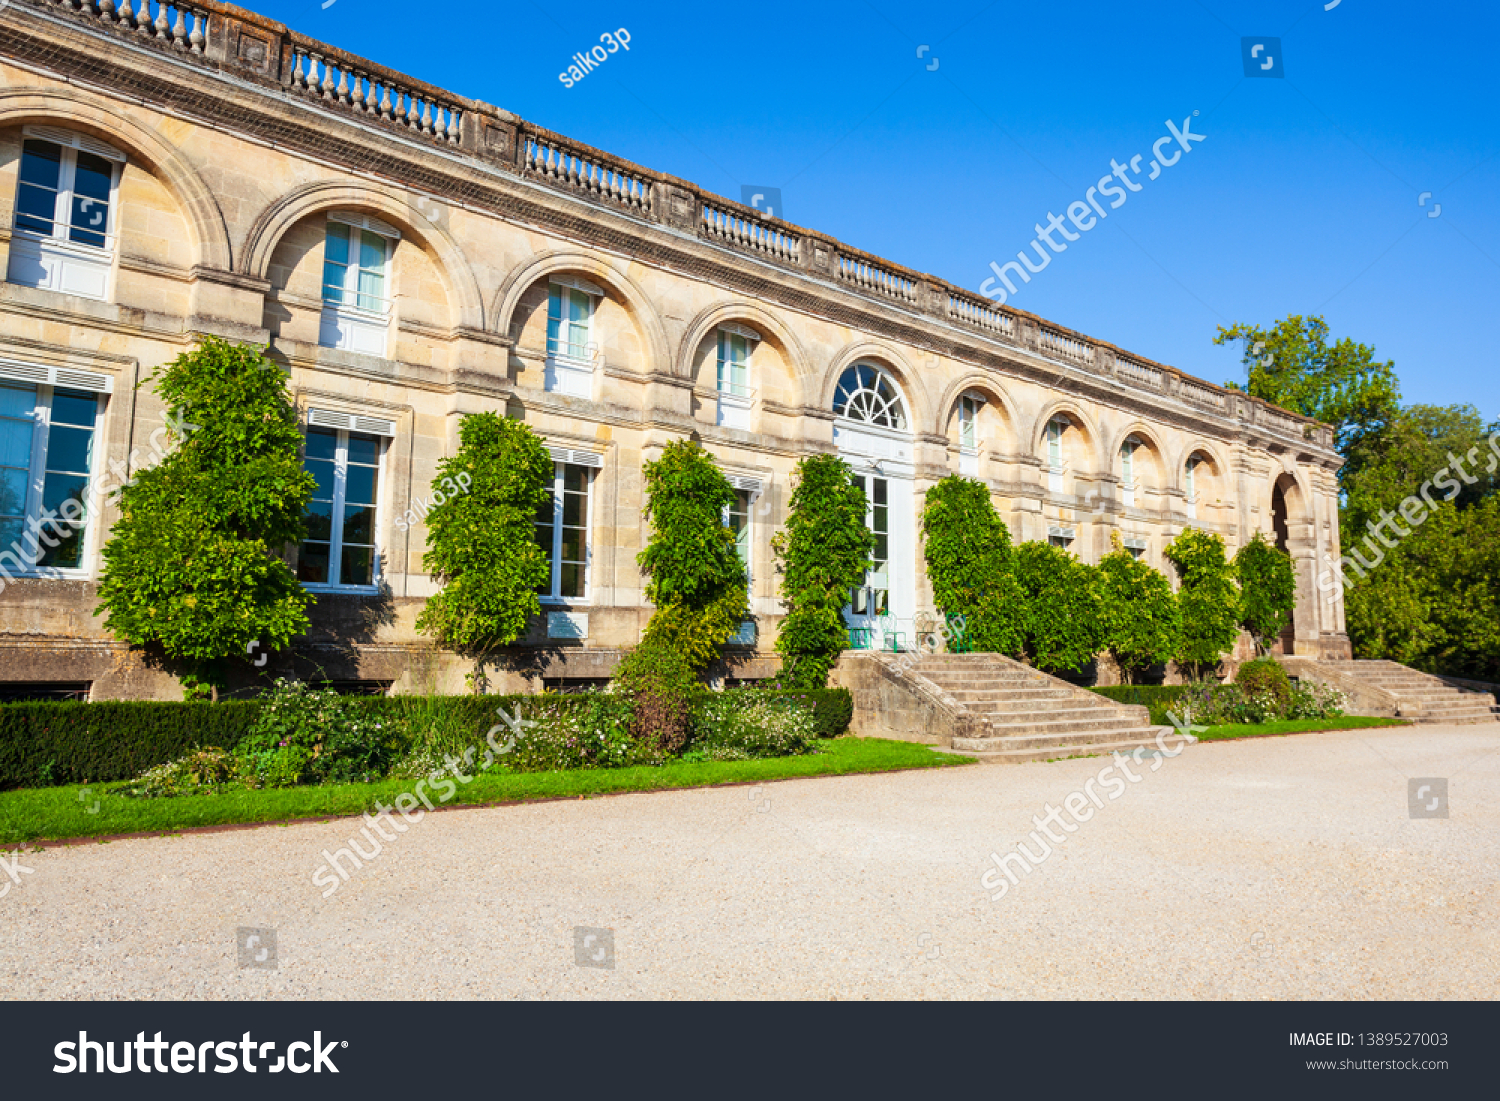 stock photo building in bordeaux public garden or jardin public de bordeaux in france